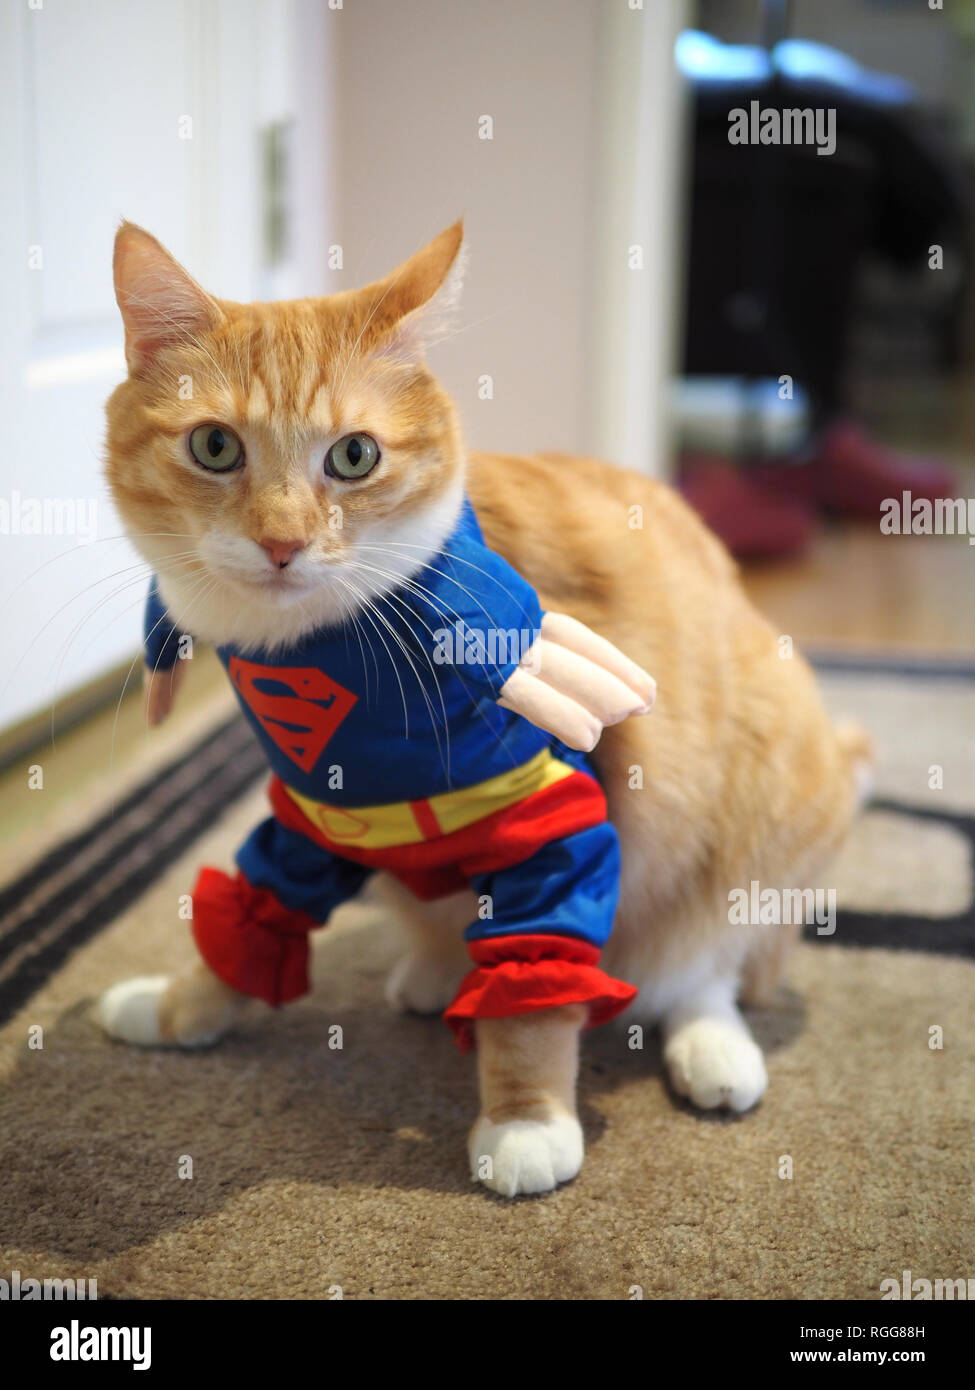 Gato de superman fotografías e imágenes de alta resolución - Alamy